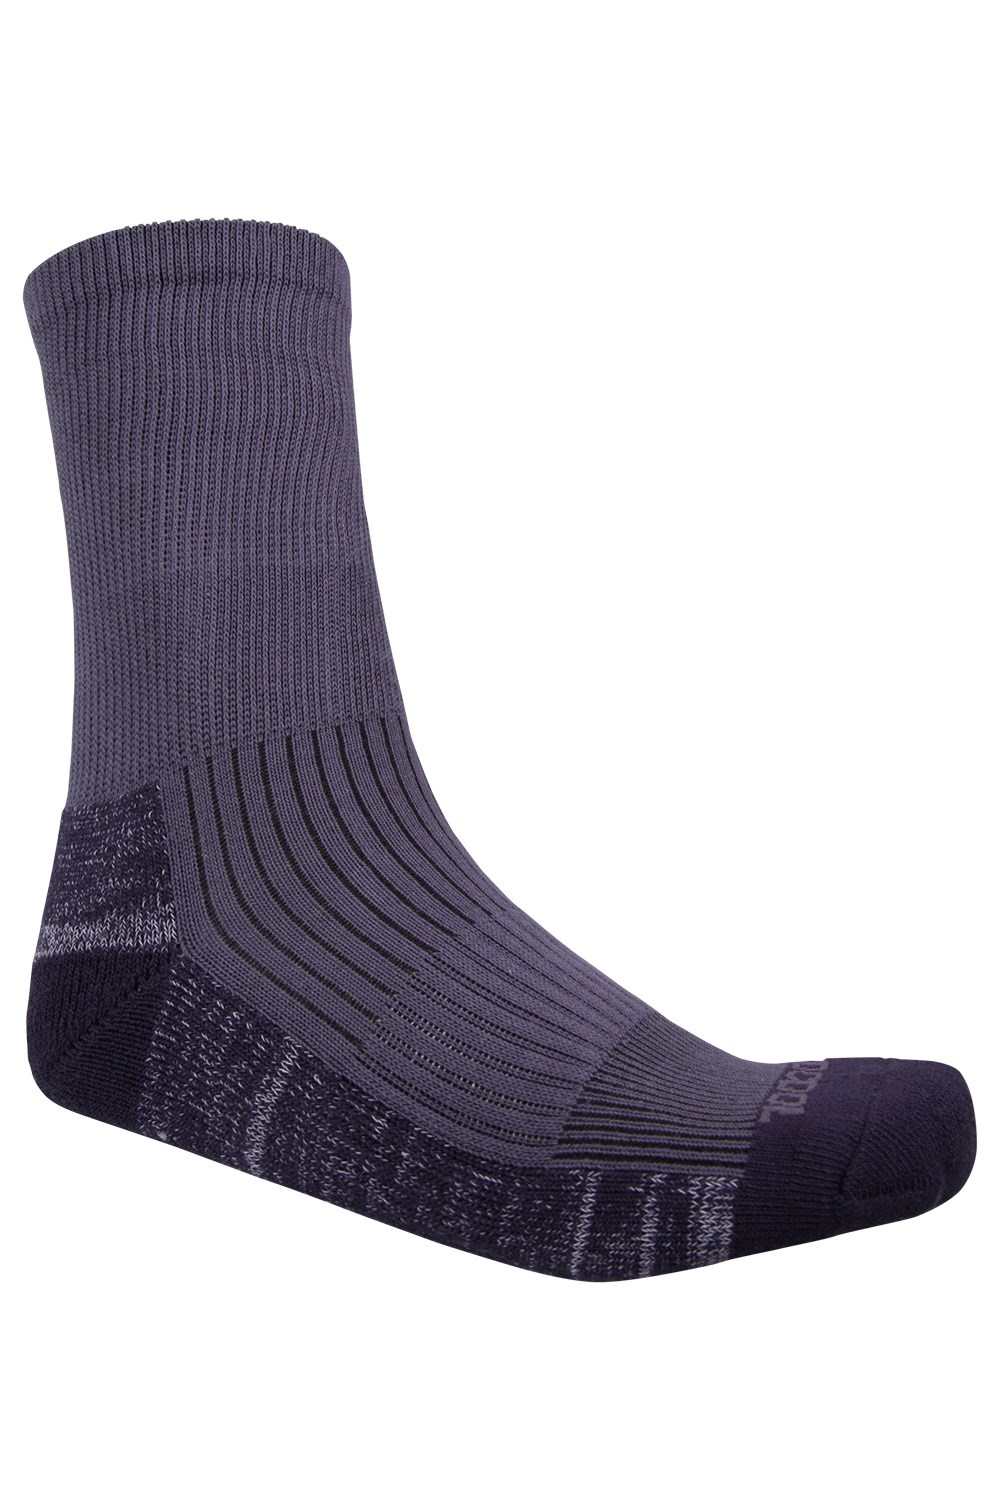 Breathable Sweat Wicking Mountain Warehouse IsoCool Mens Ski Socks Best for Winter Sports Bright Orange 7-11 Lightweight Snowboarding Socks